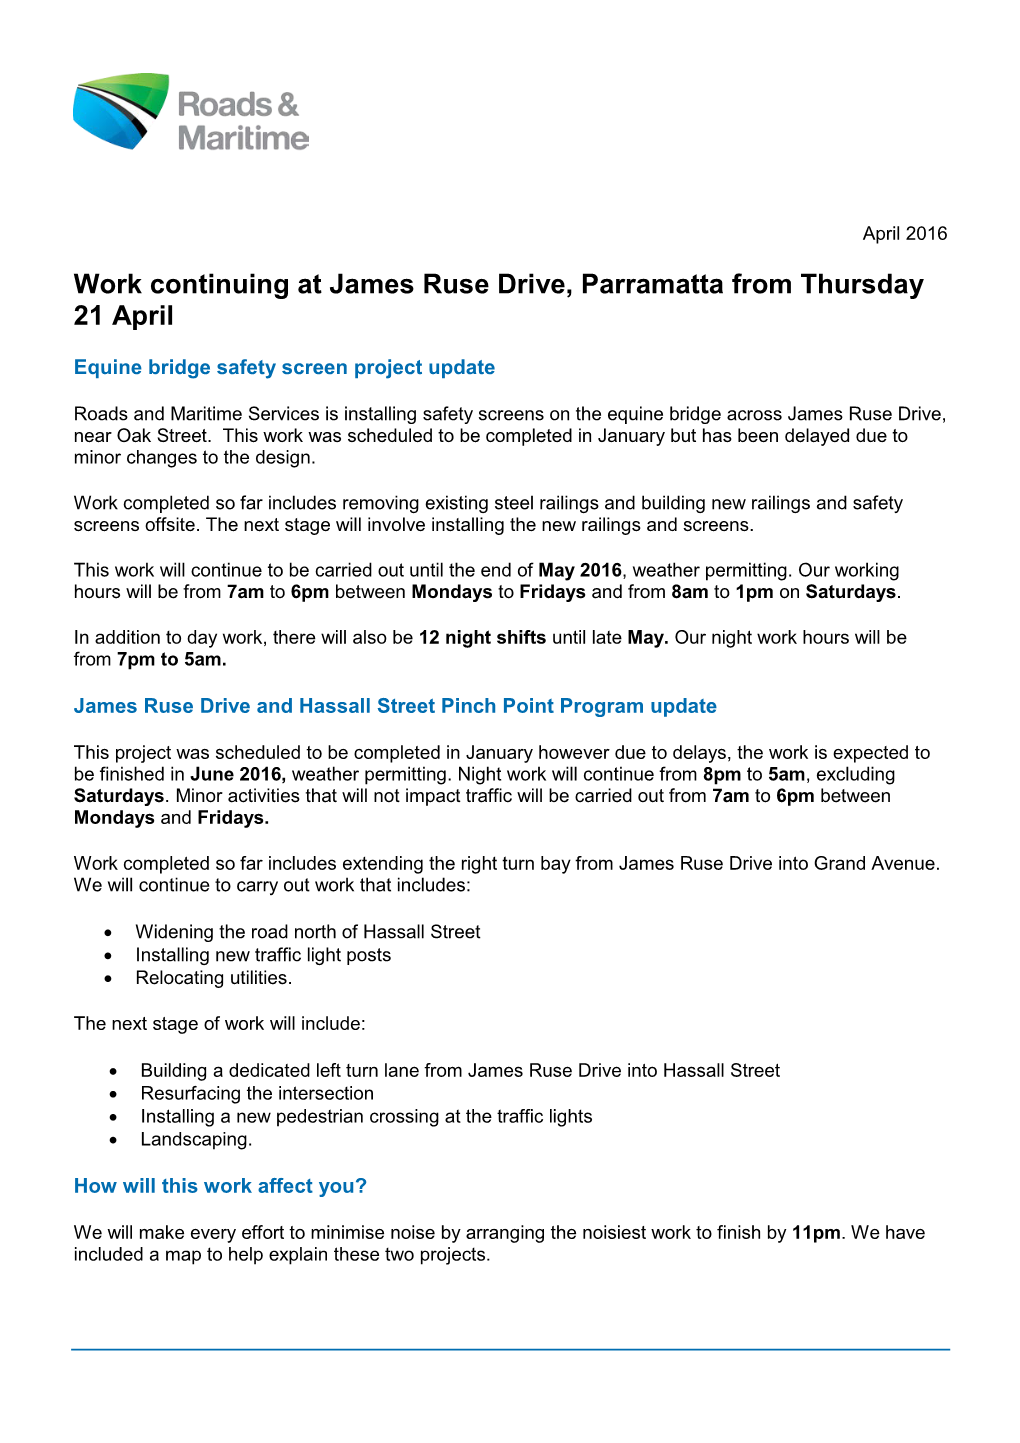 Work Continuing at James Ruse Drive, Parramatta from Thursday 21 April